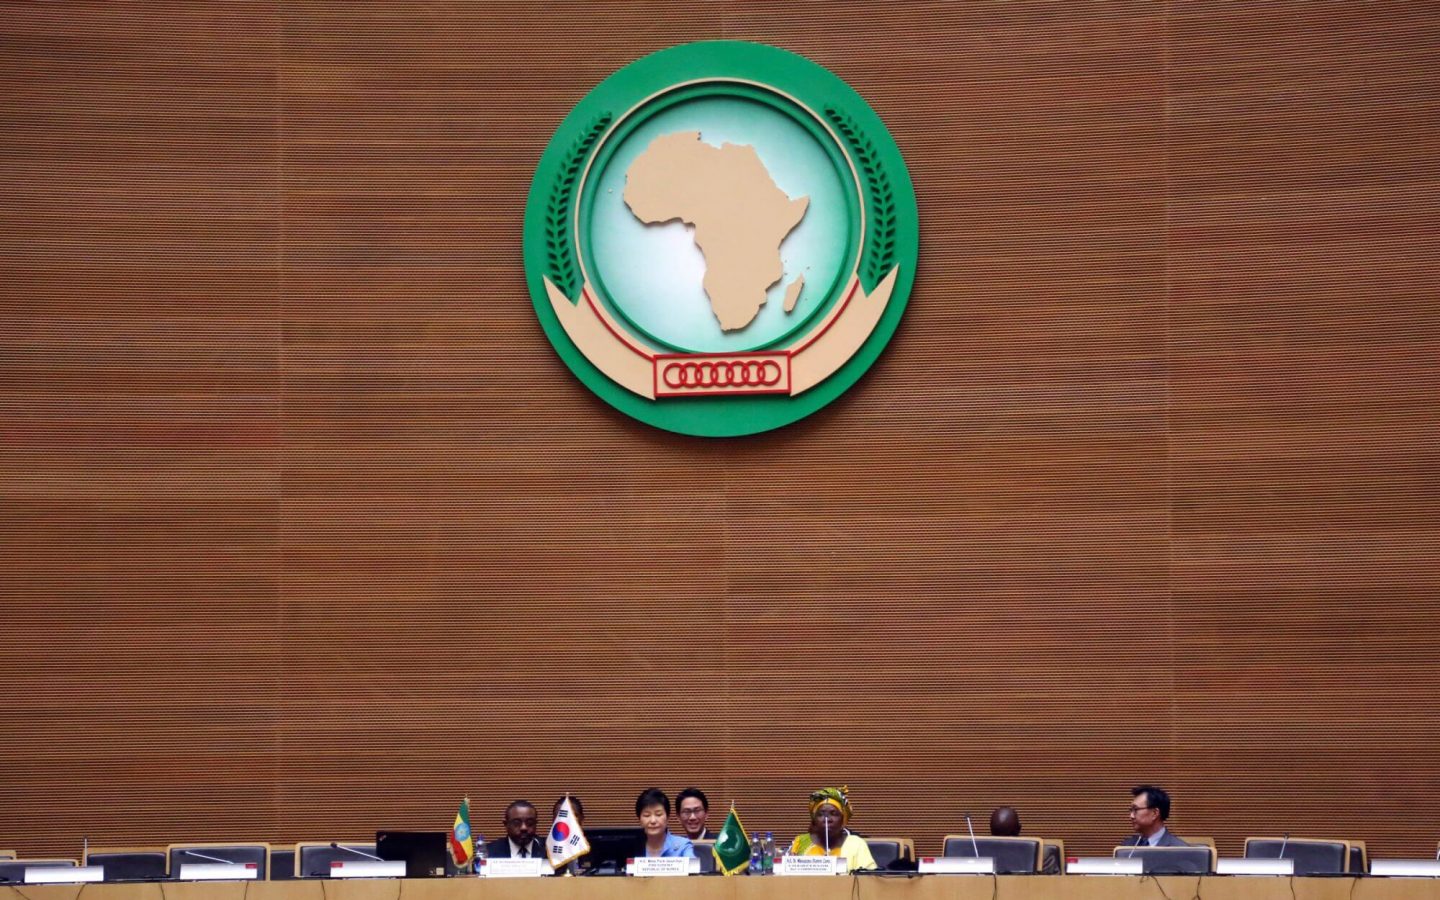 African Union Passport